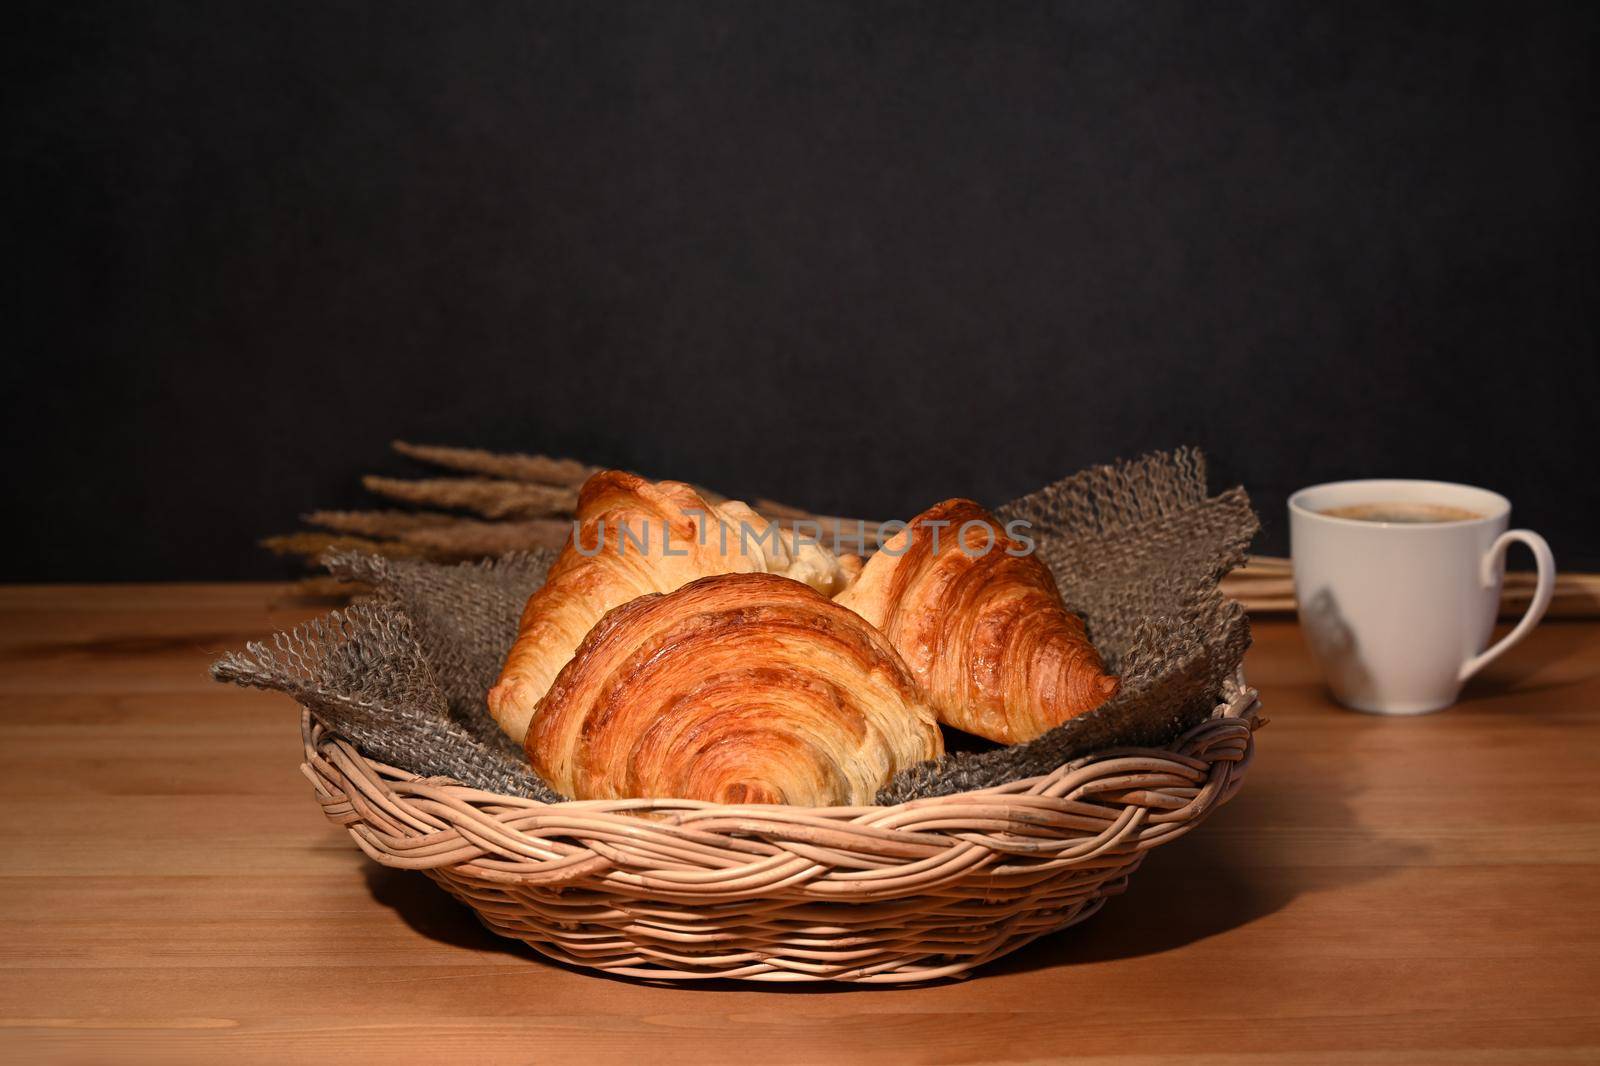 Warm fresh buttery croissants in wicker basket. Breakfast, bread bakery products cafe concept.